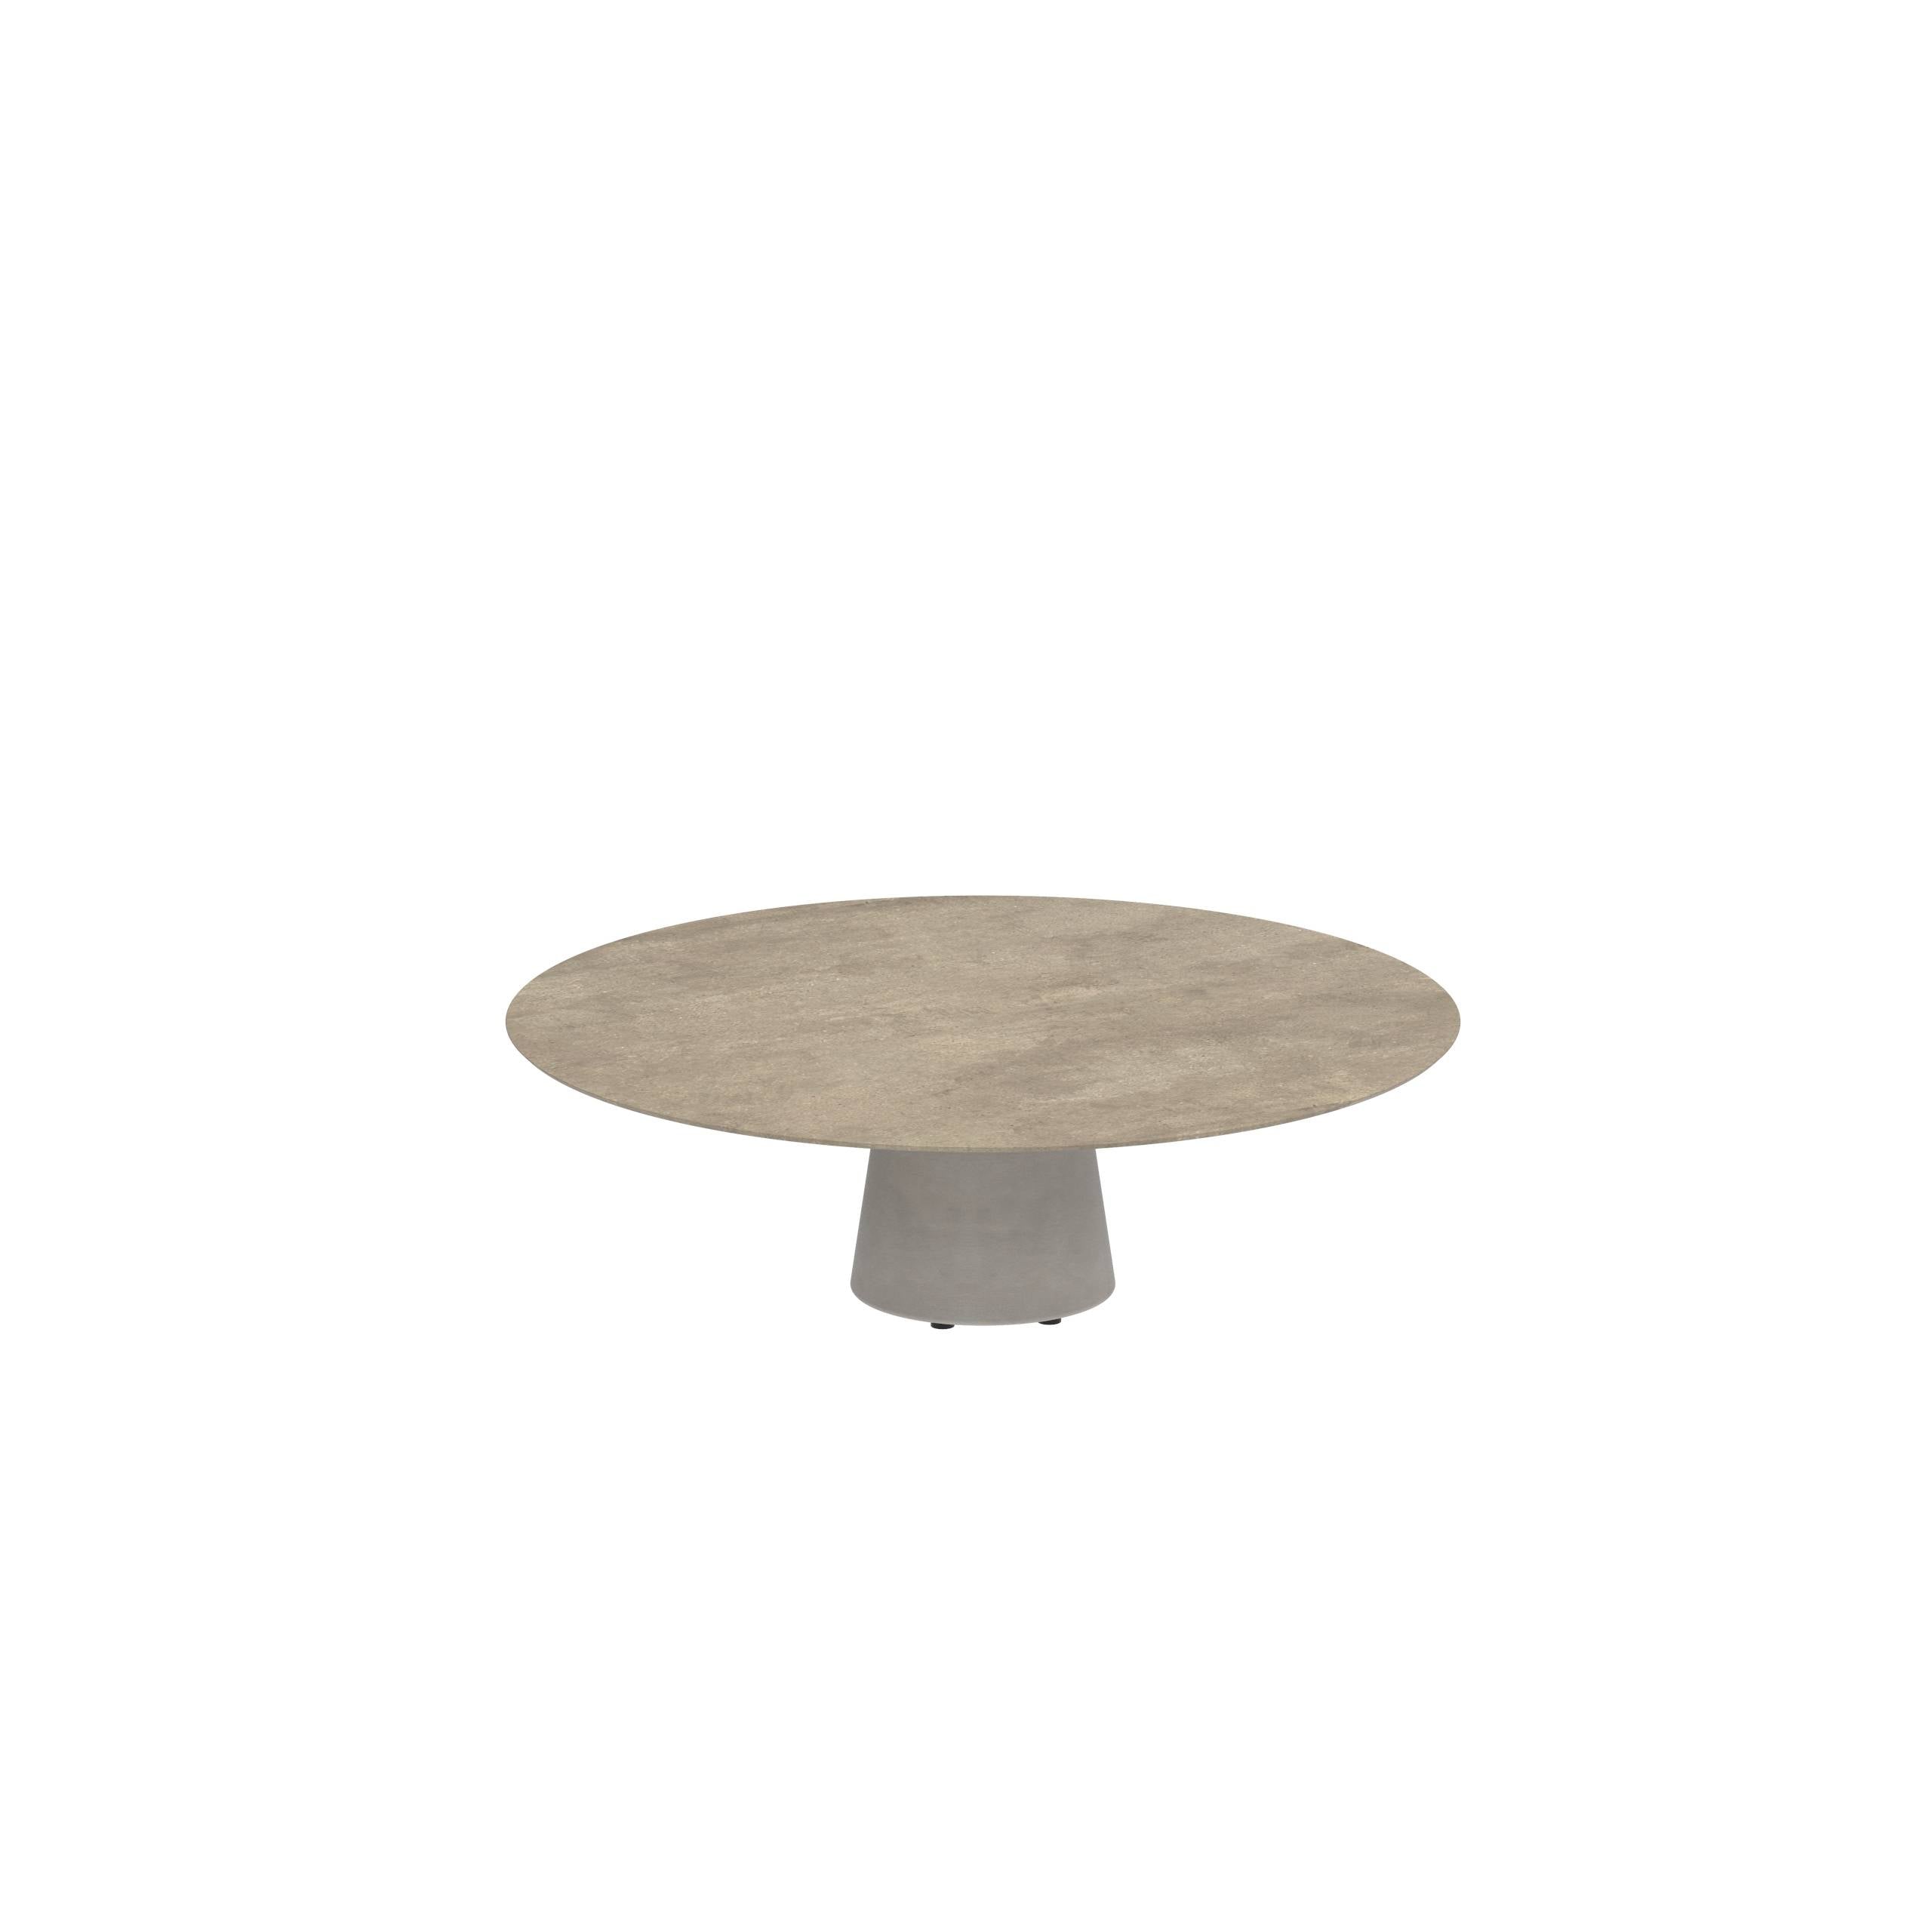 Conix Table Round Ø 160cm High Lounge Leg Concrete Cement Grey - Tabletop Ceramic Terra Sabbia